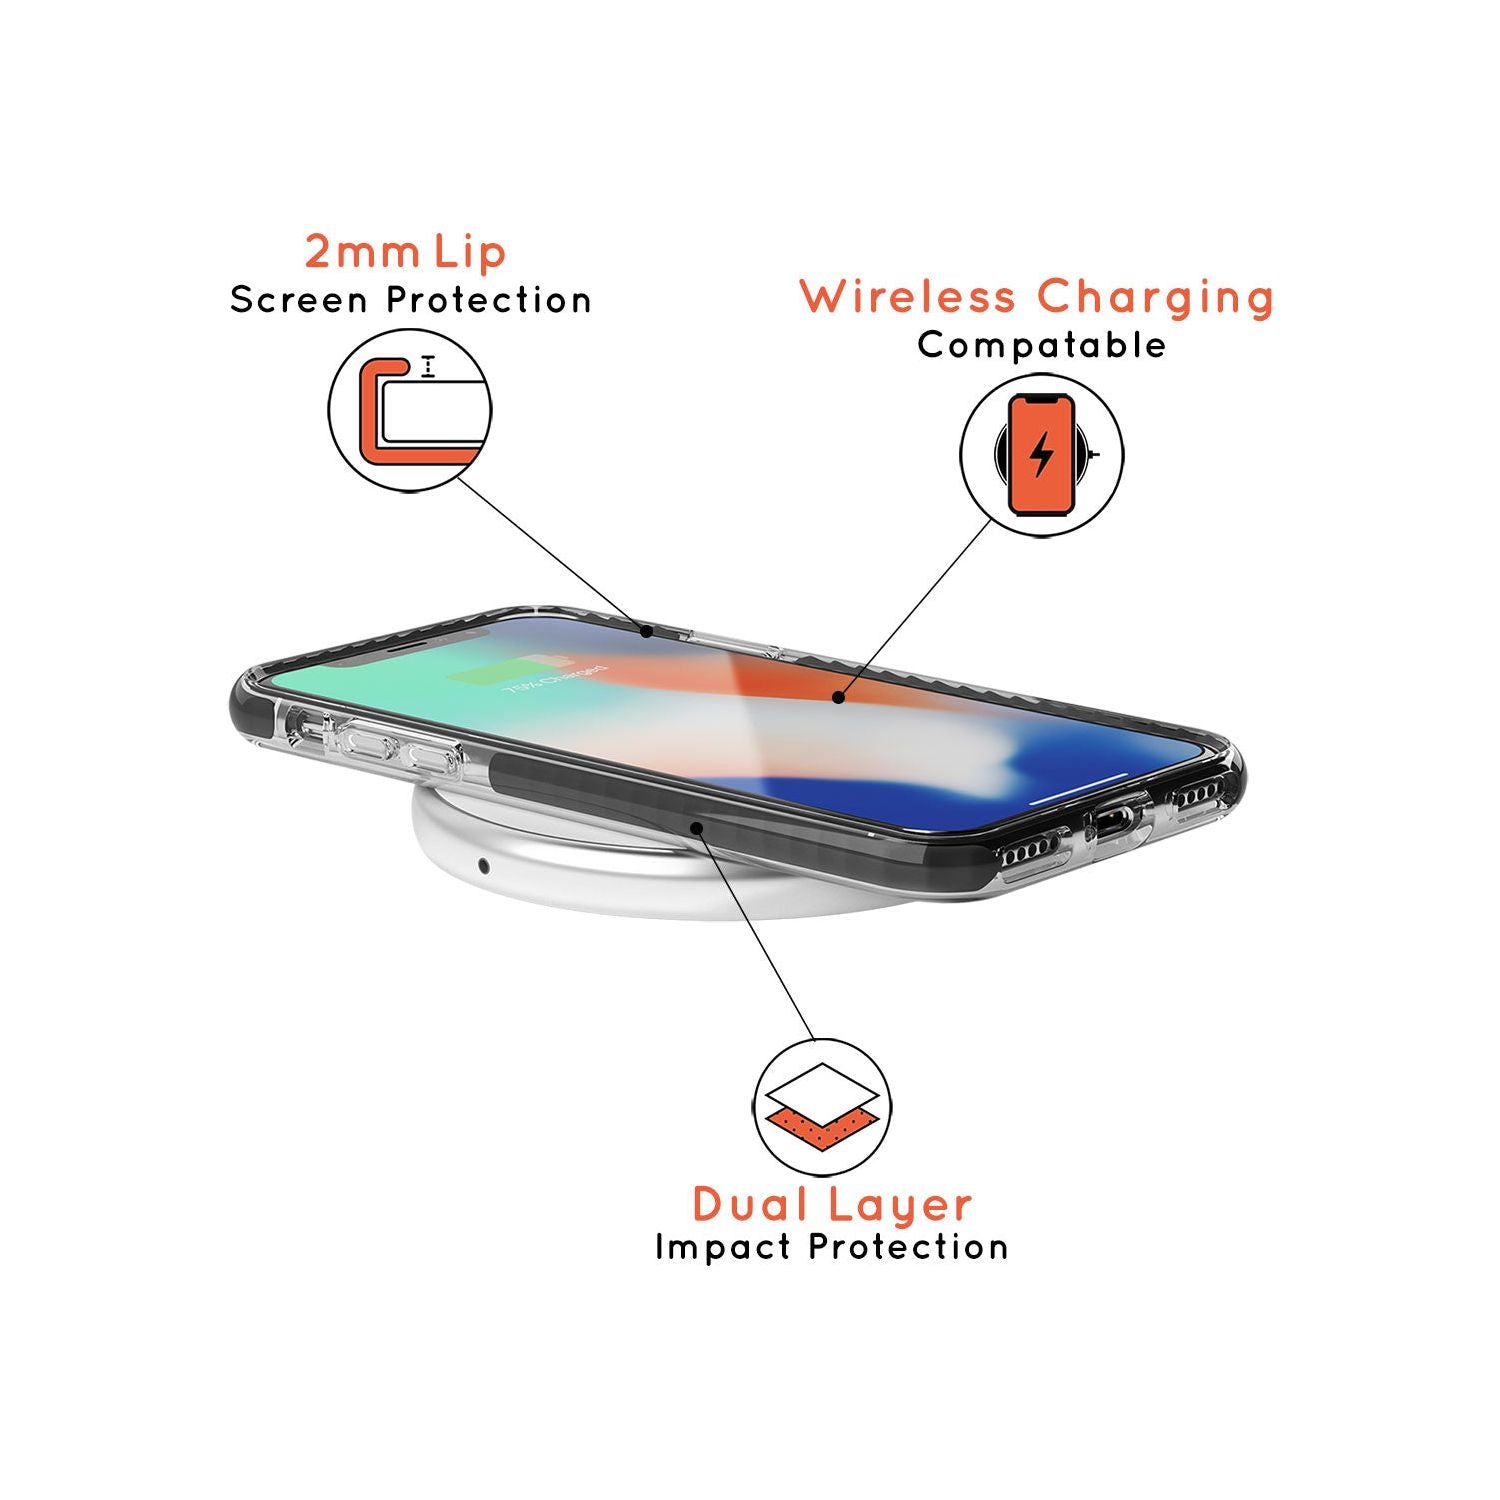 Orange Marbled Paper Pattern Black Impact Phone Case for iPhone SE 8 7 Plus